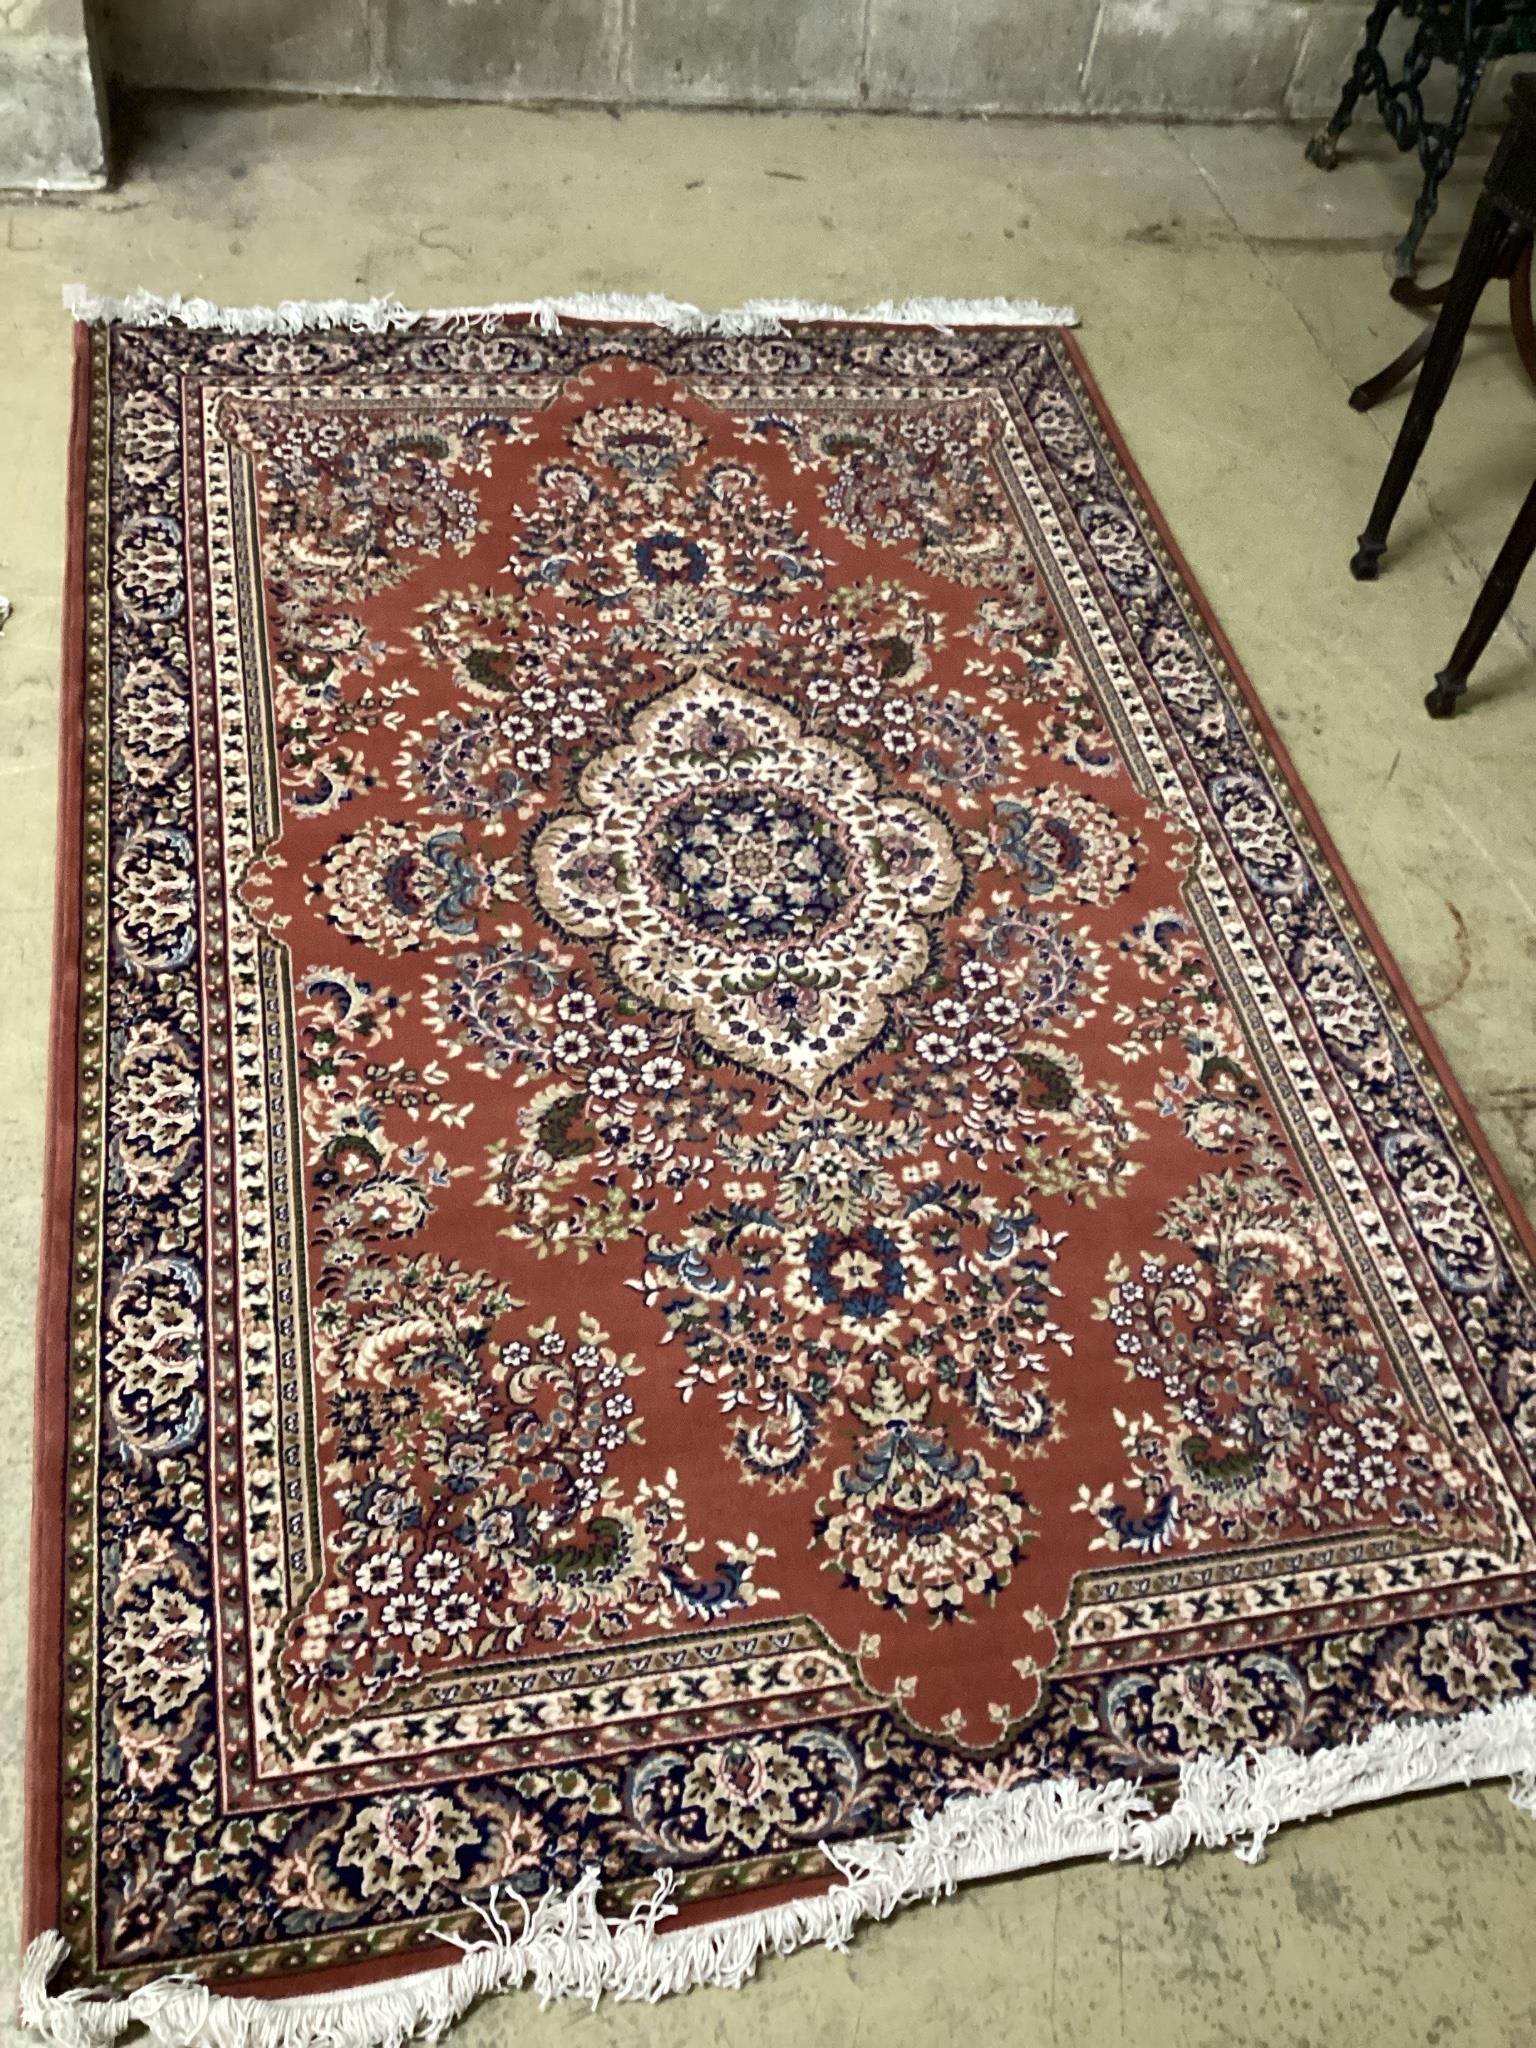 A modern Tabriz style red ground rug, 240 x 162cm